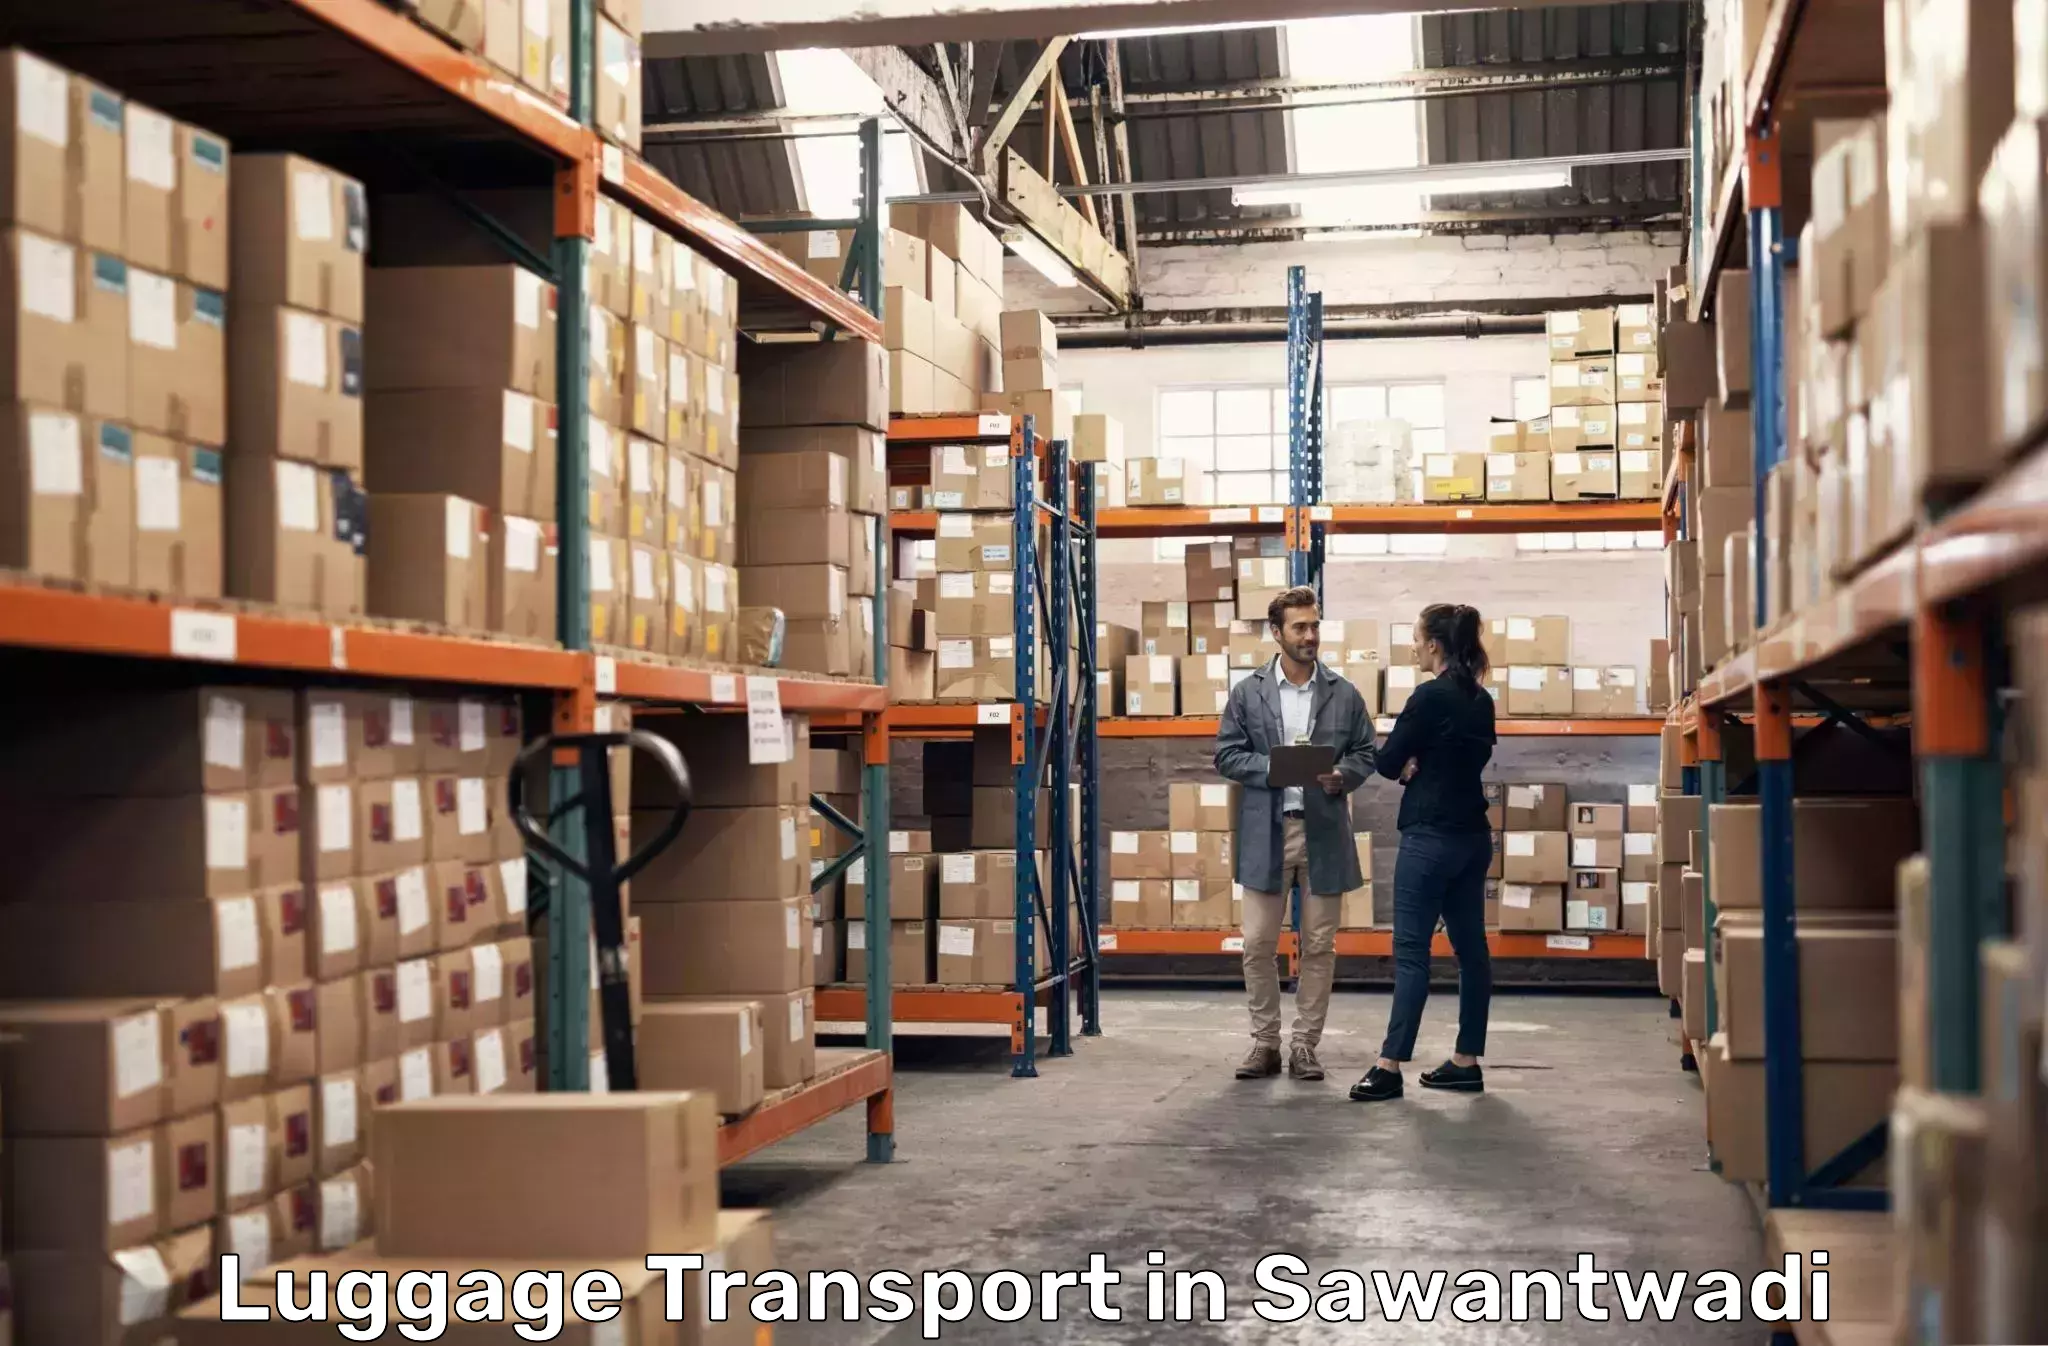 Luggage transport service in Sawantwadi